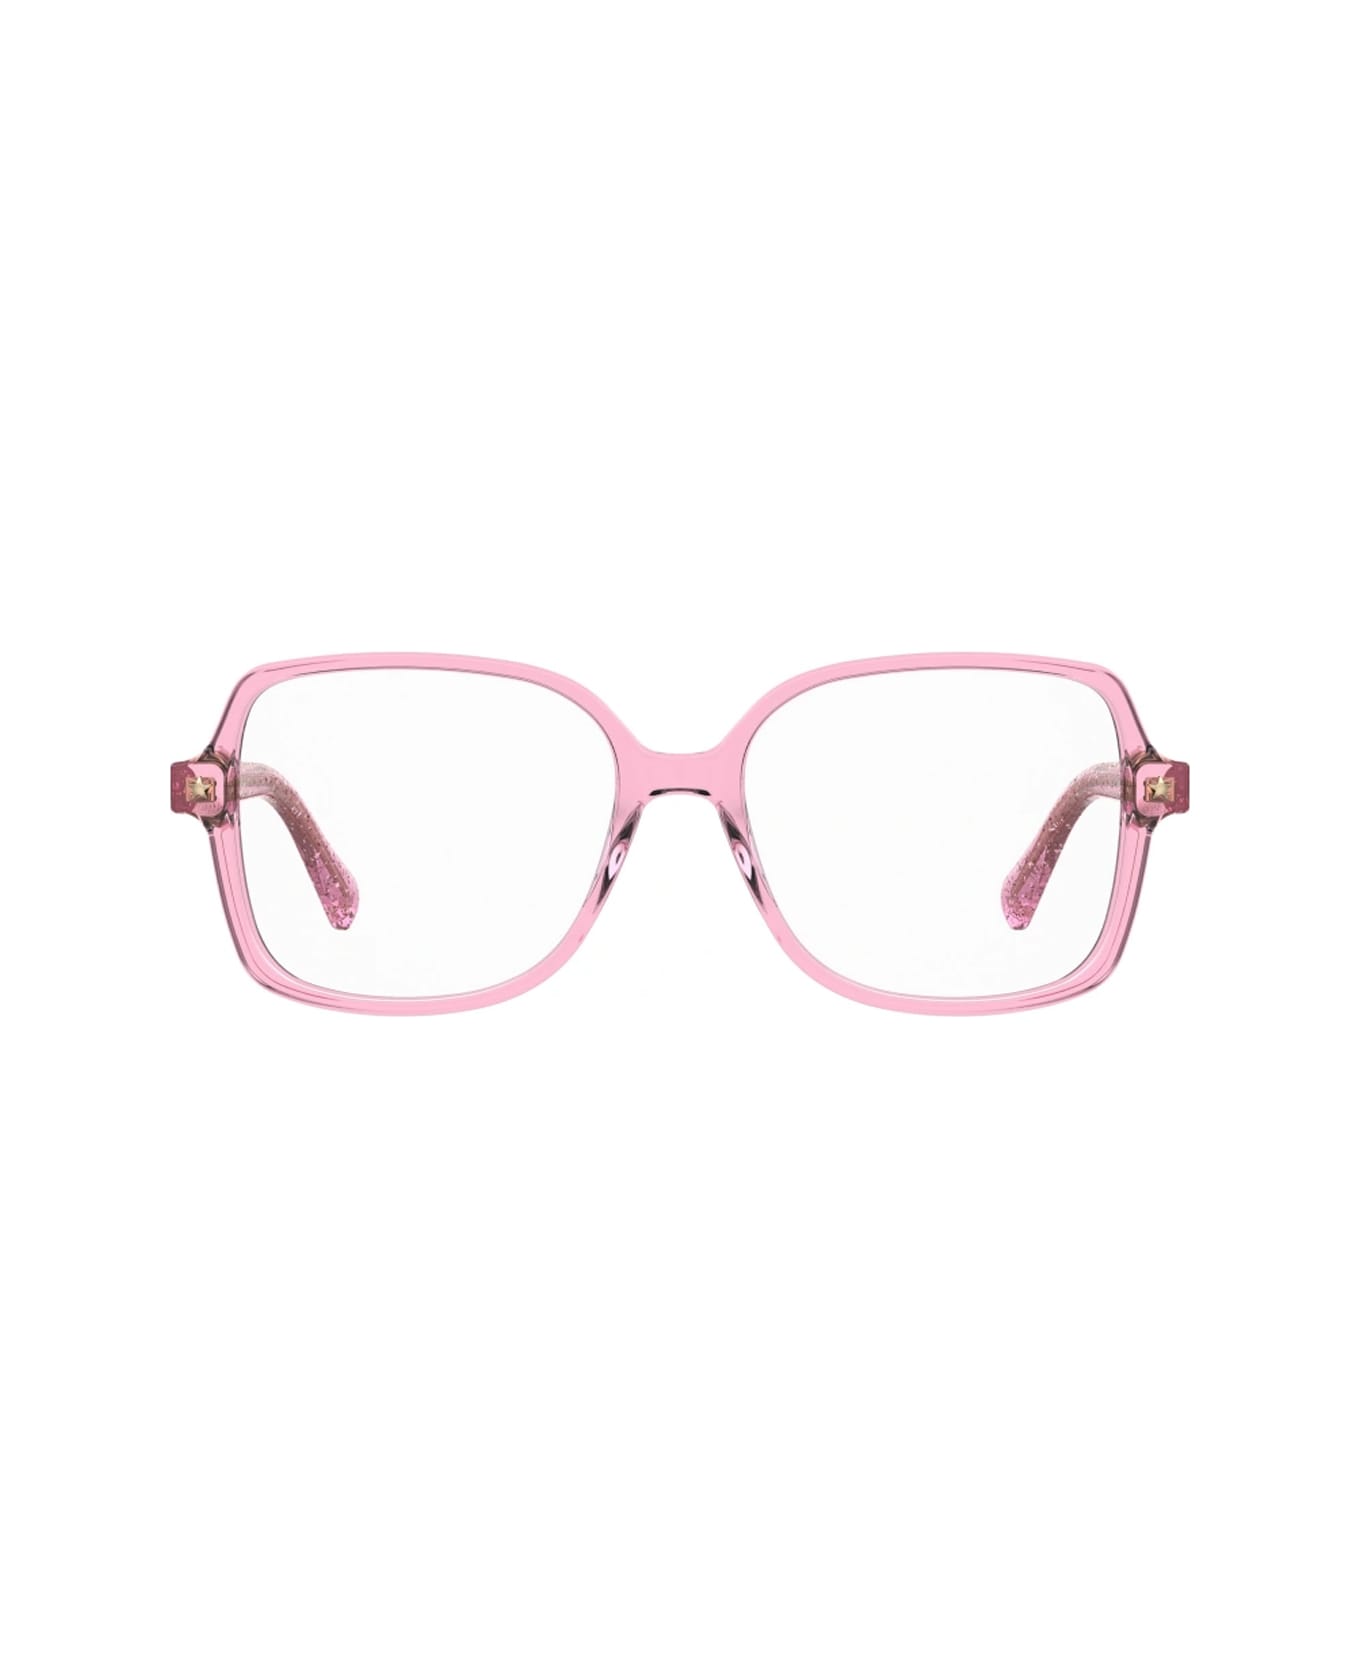 Chiara Ferragni Cf 1026 35j/16 Pink Glasses - Rosa